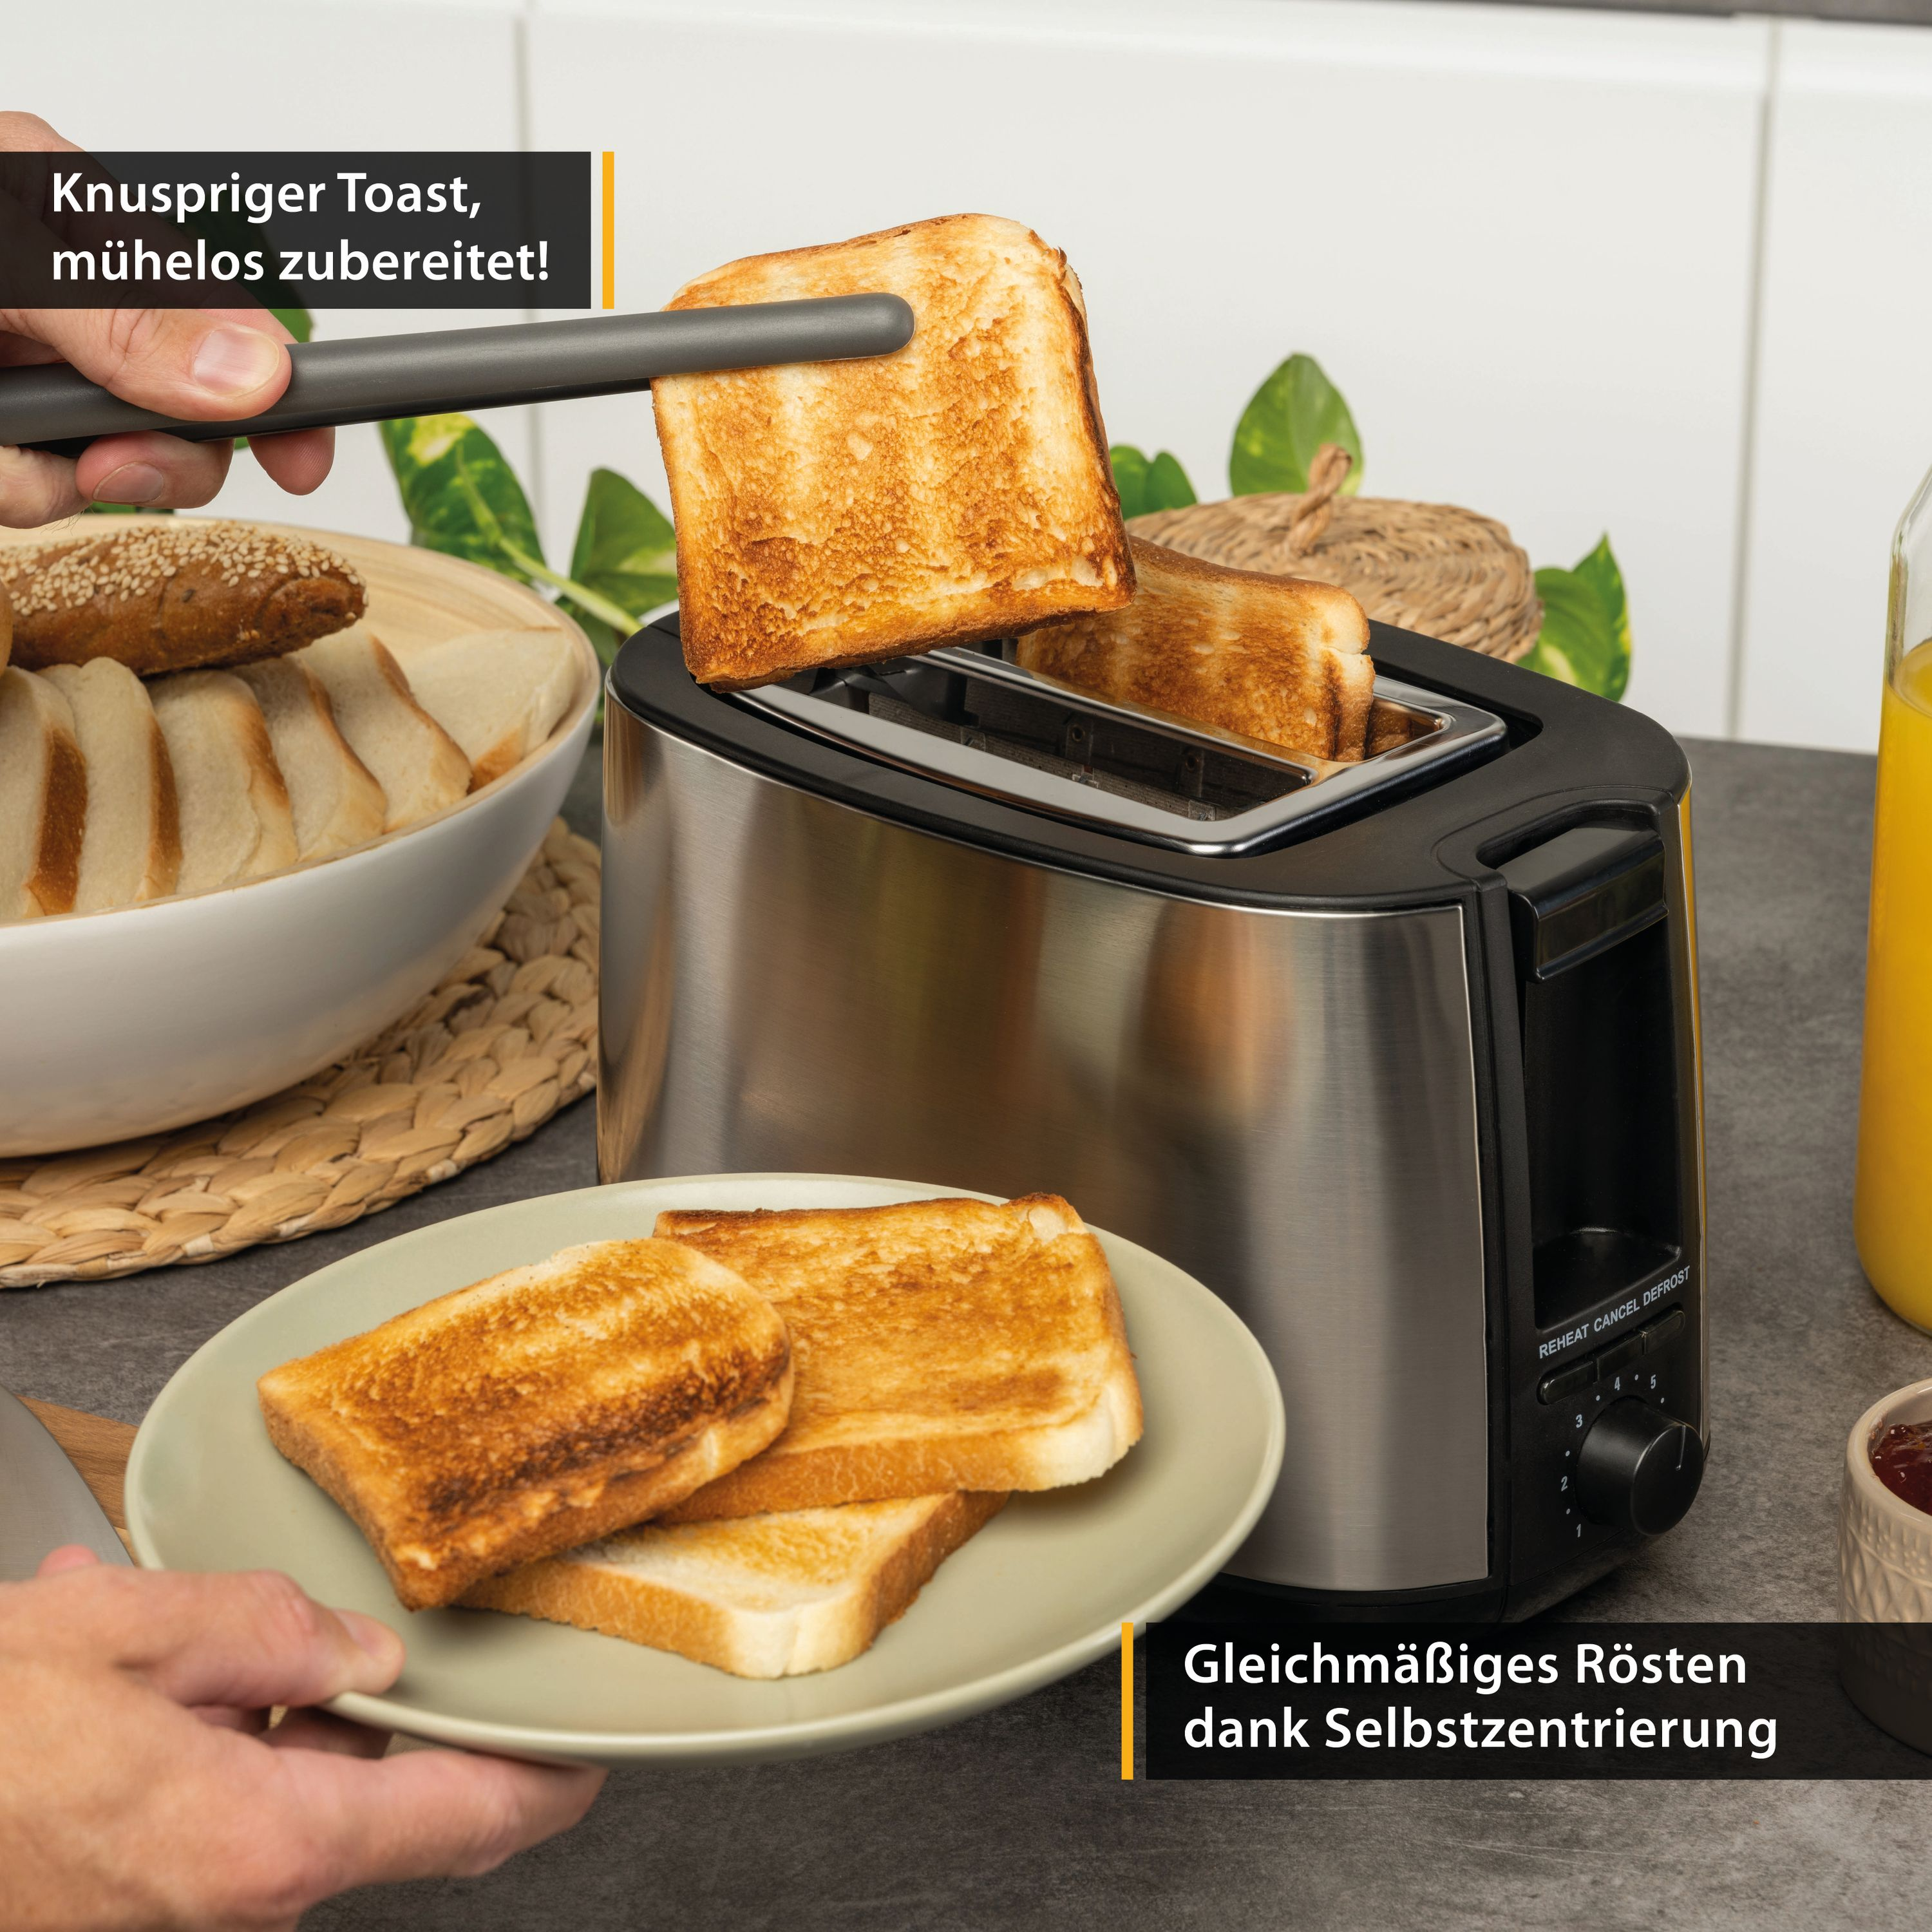 TZS FIRST Toaster Watt, 2) (750 Schlitze: AUSTRIA FA-5369-4 50